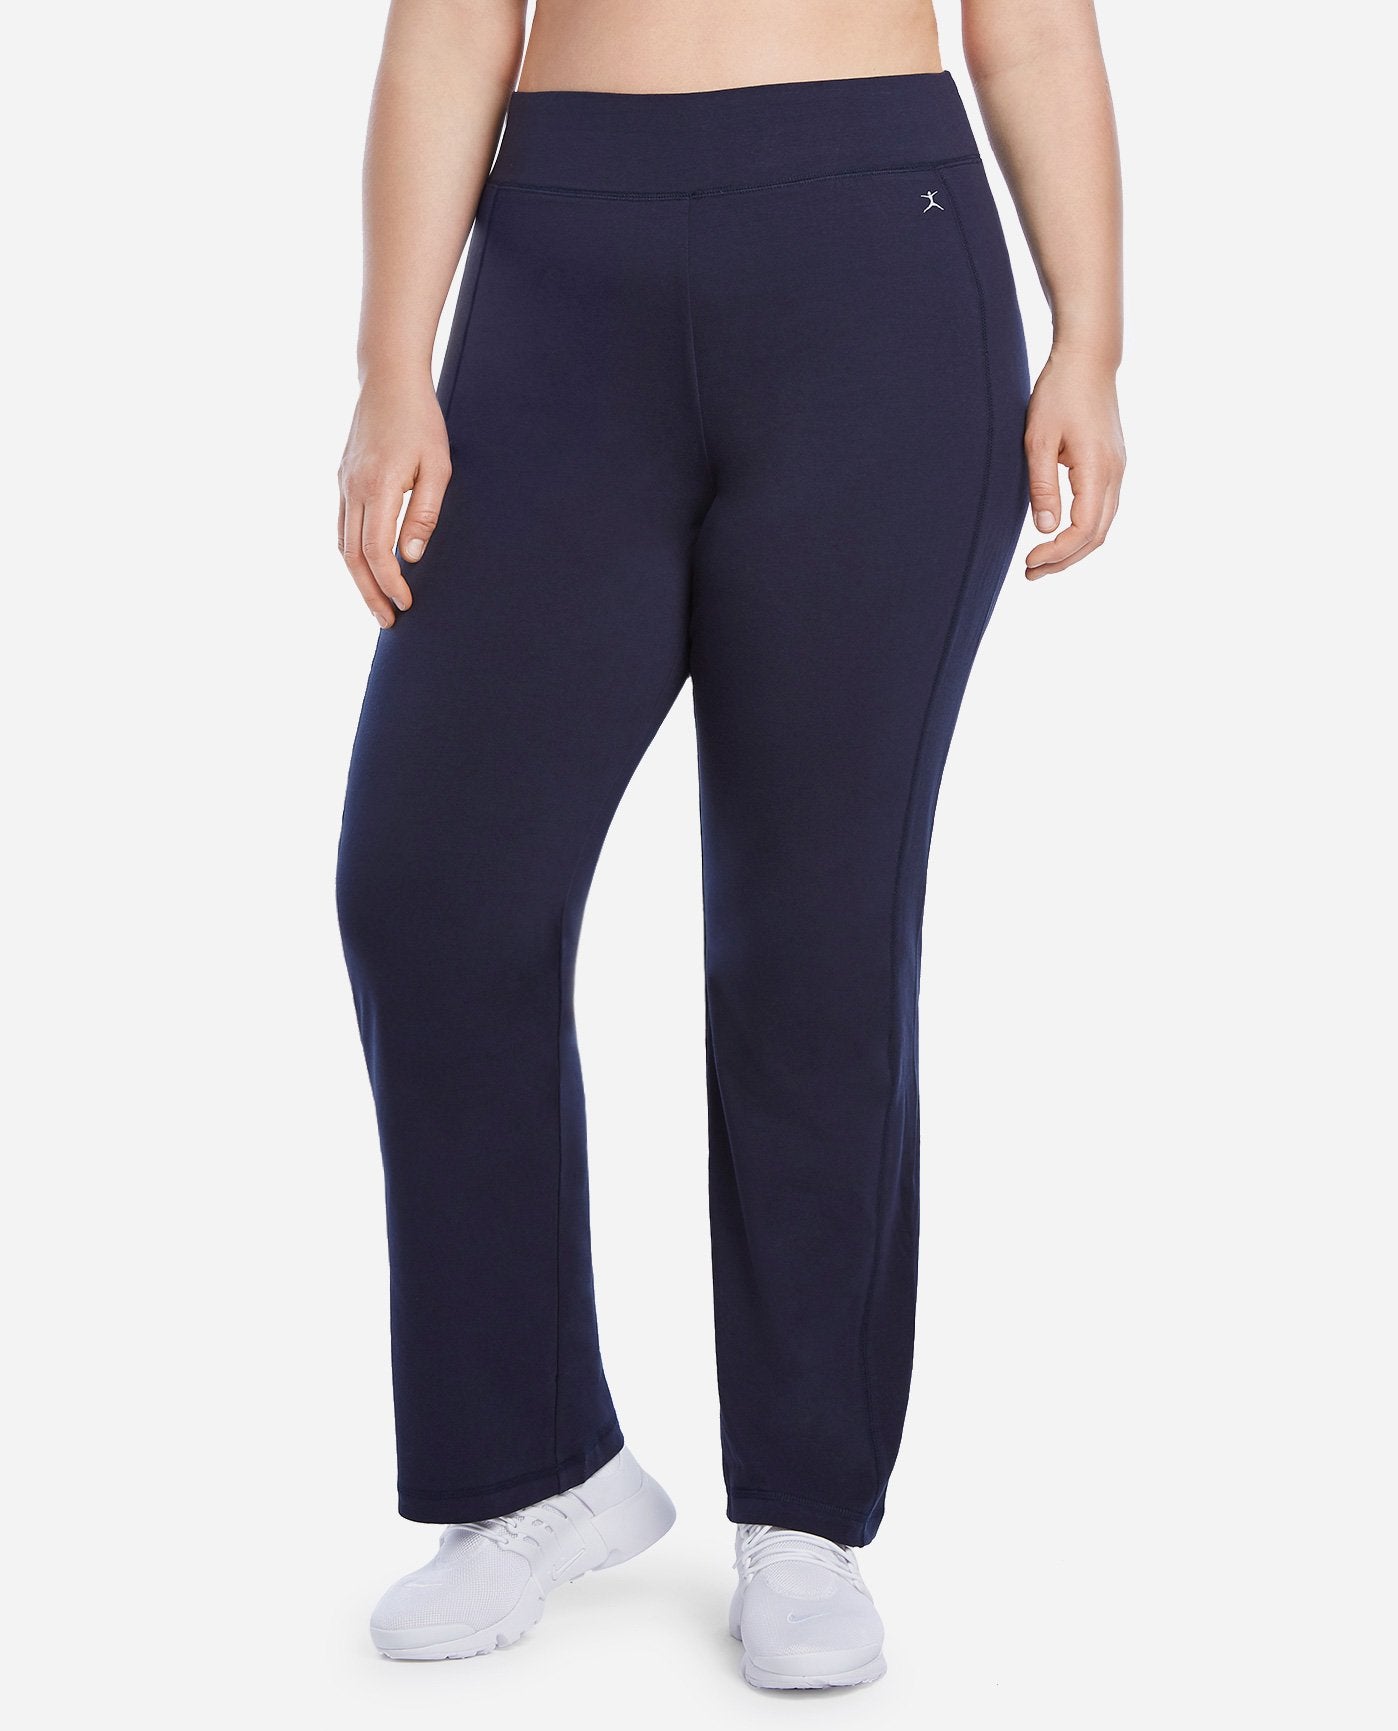 Danskin Tie-dye Multi Color Blue Yoga Pants Size M - 44% off